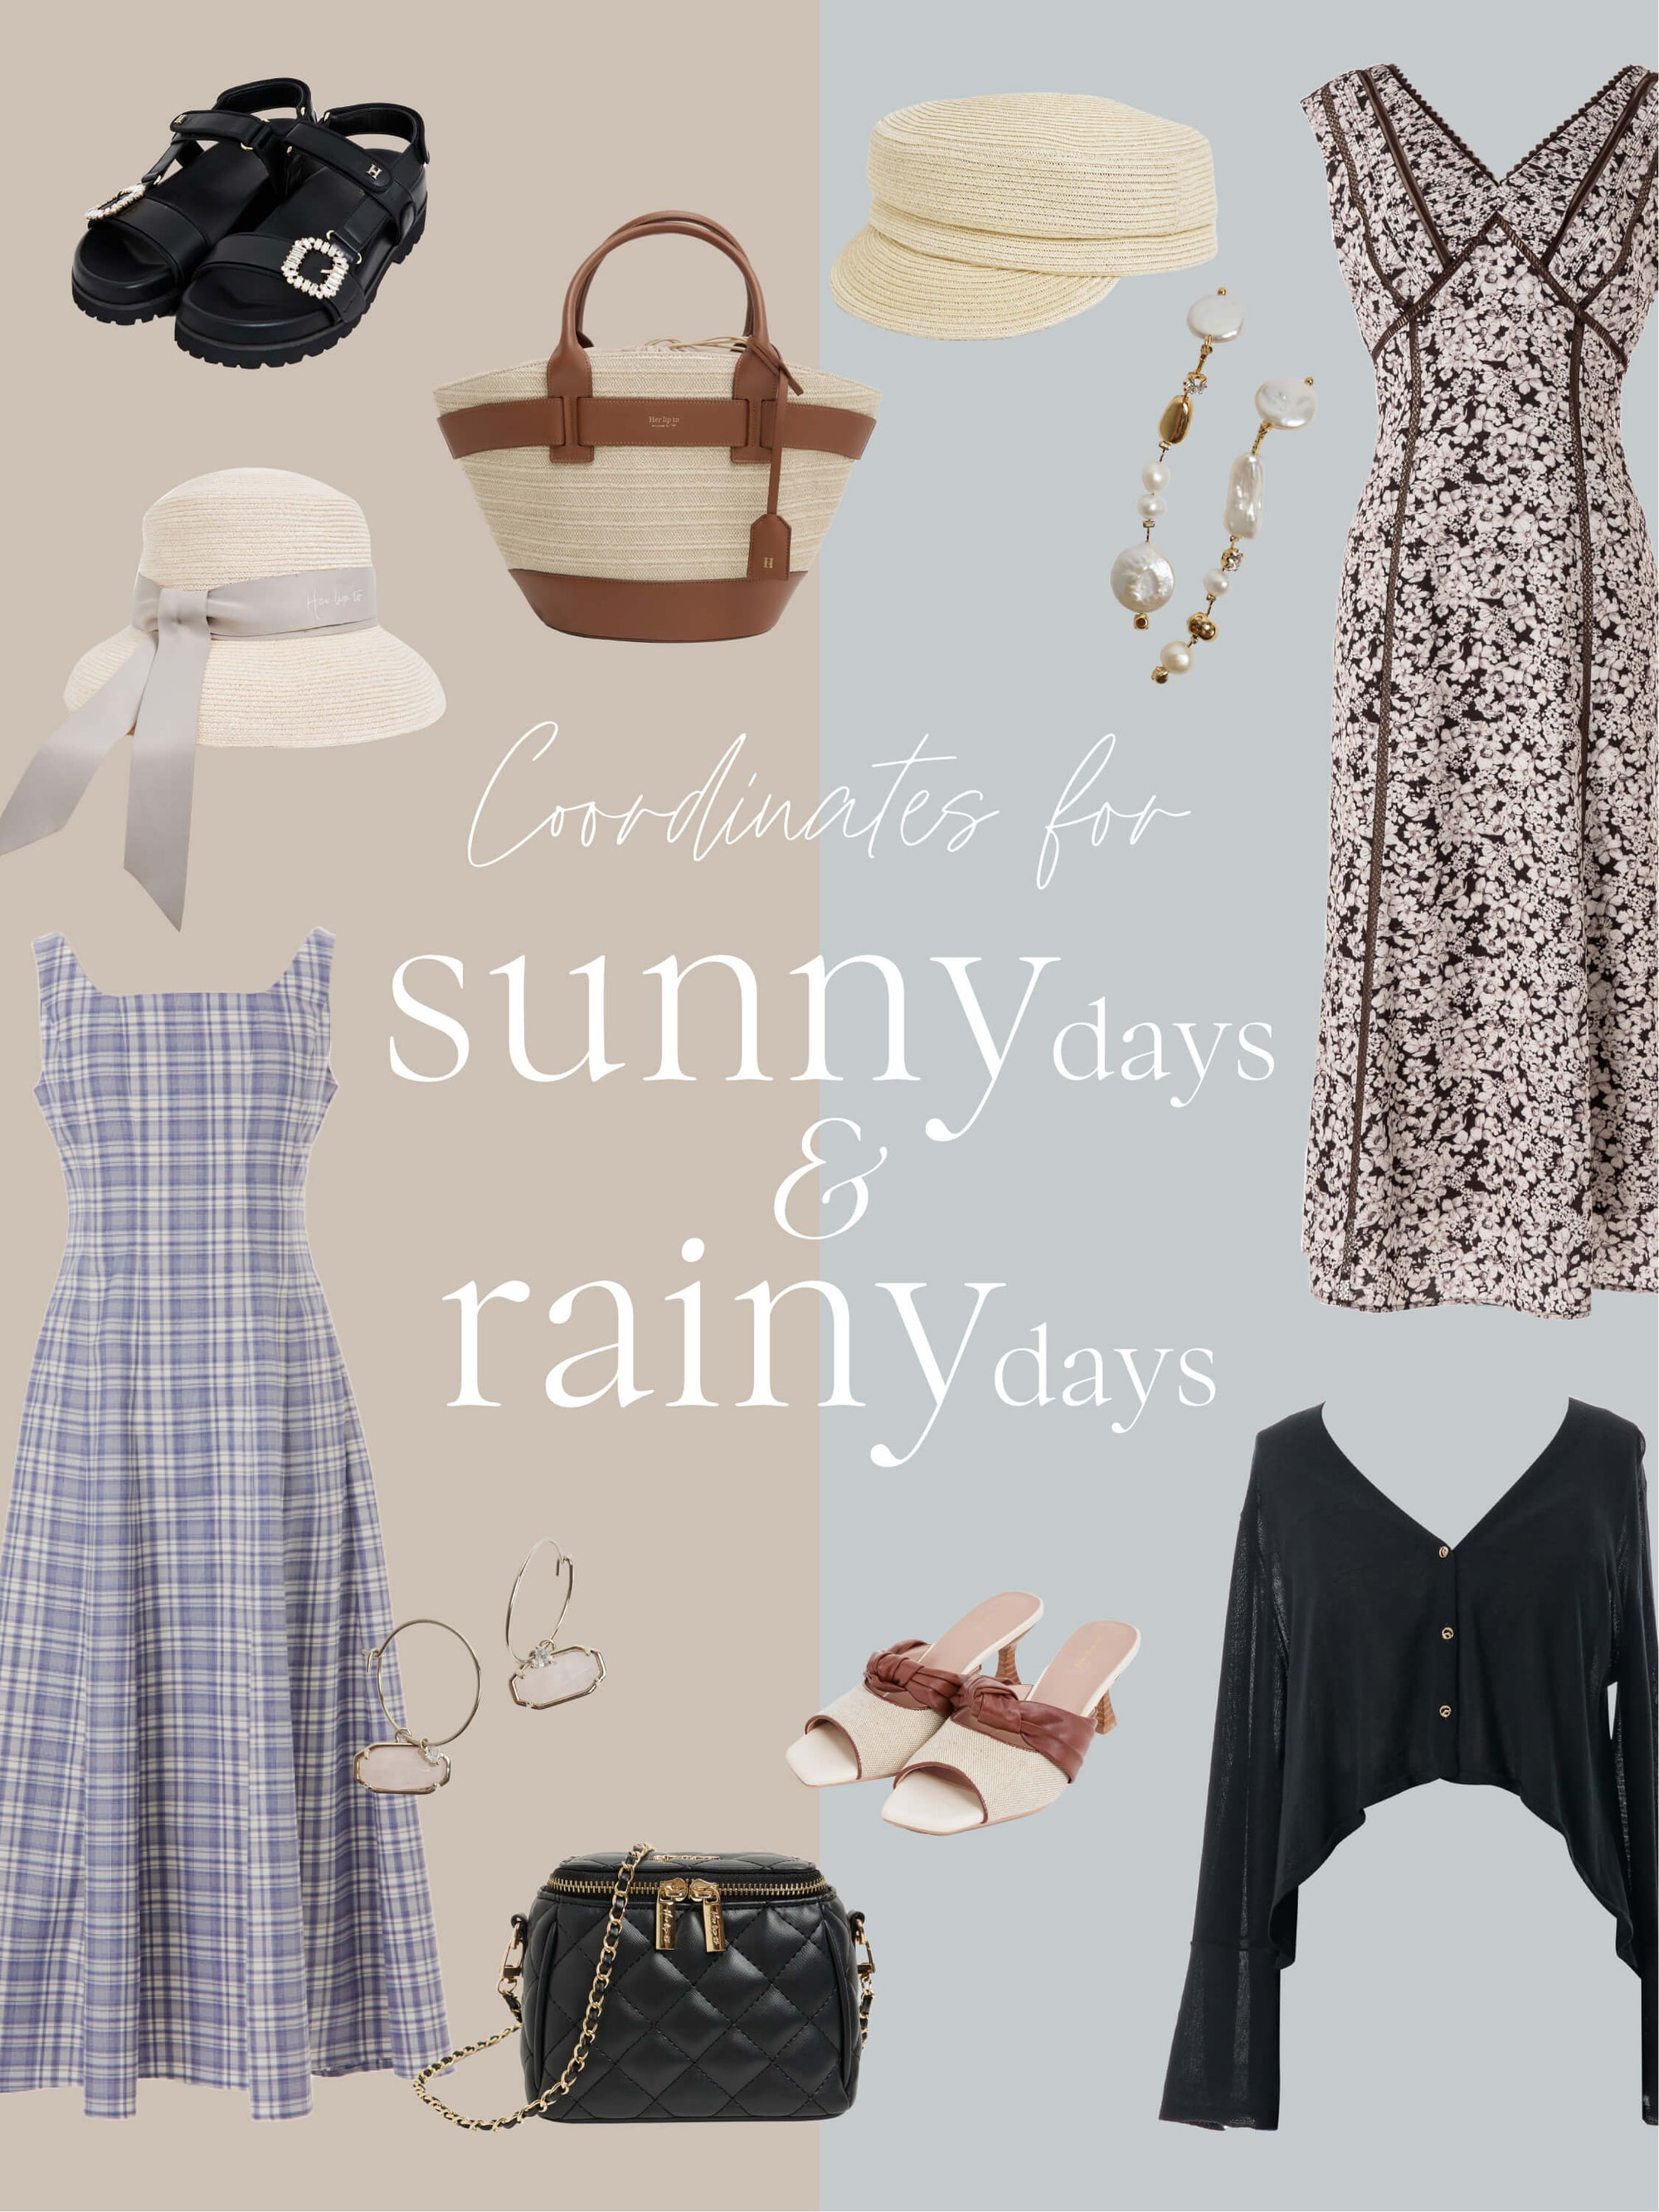 Coordinates for sunny days & rainy days